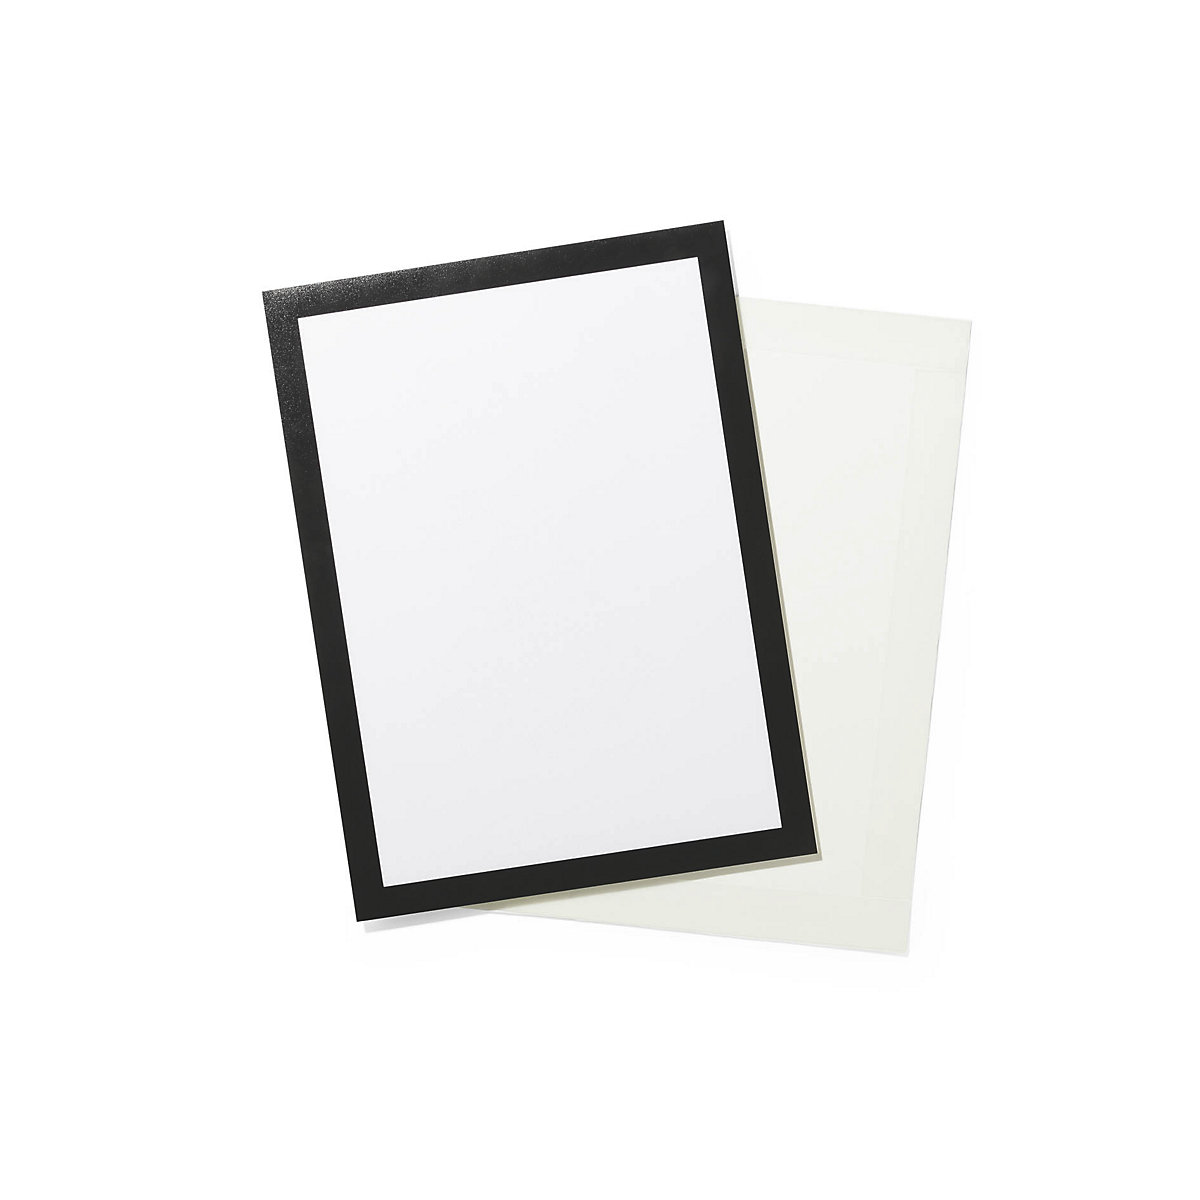 DURAFRAME® GRIP A4 foil frame with Velcro strips - DURABLE